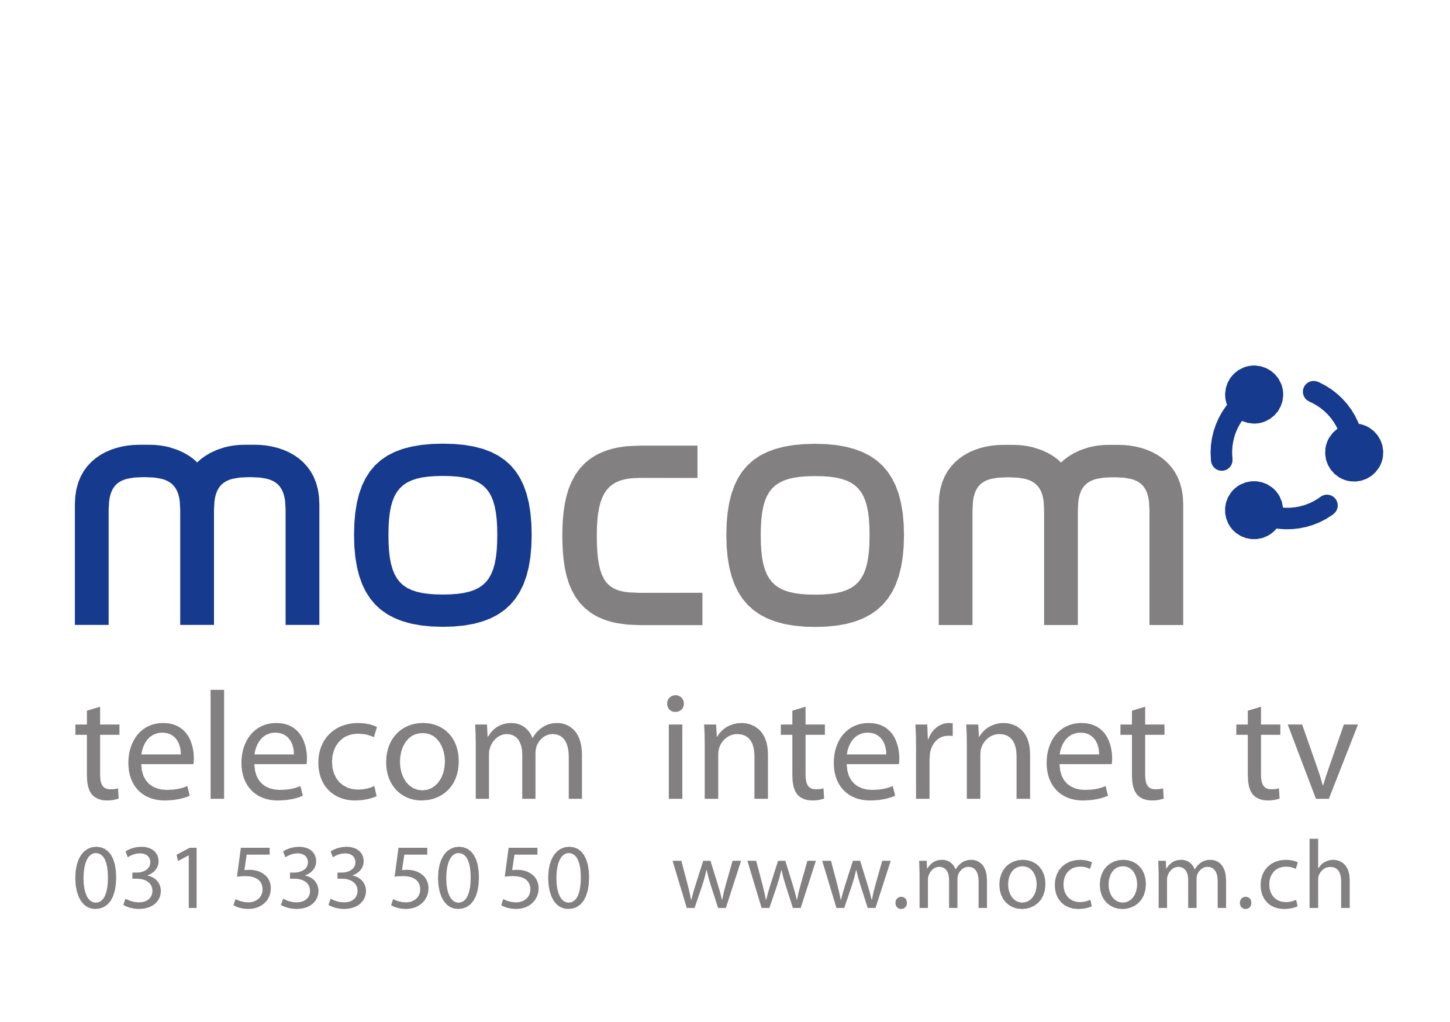 mocom-logo-b-15-07-2019